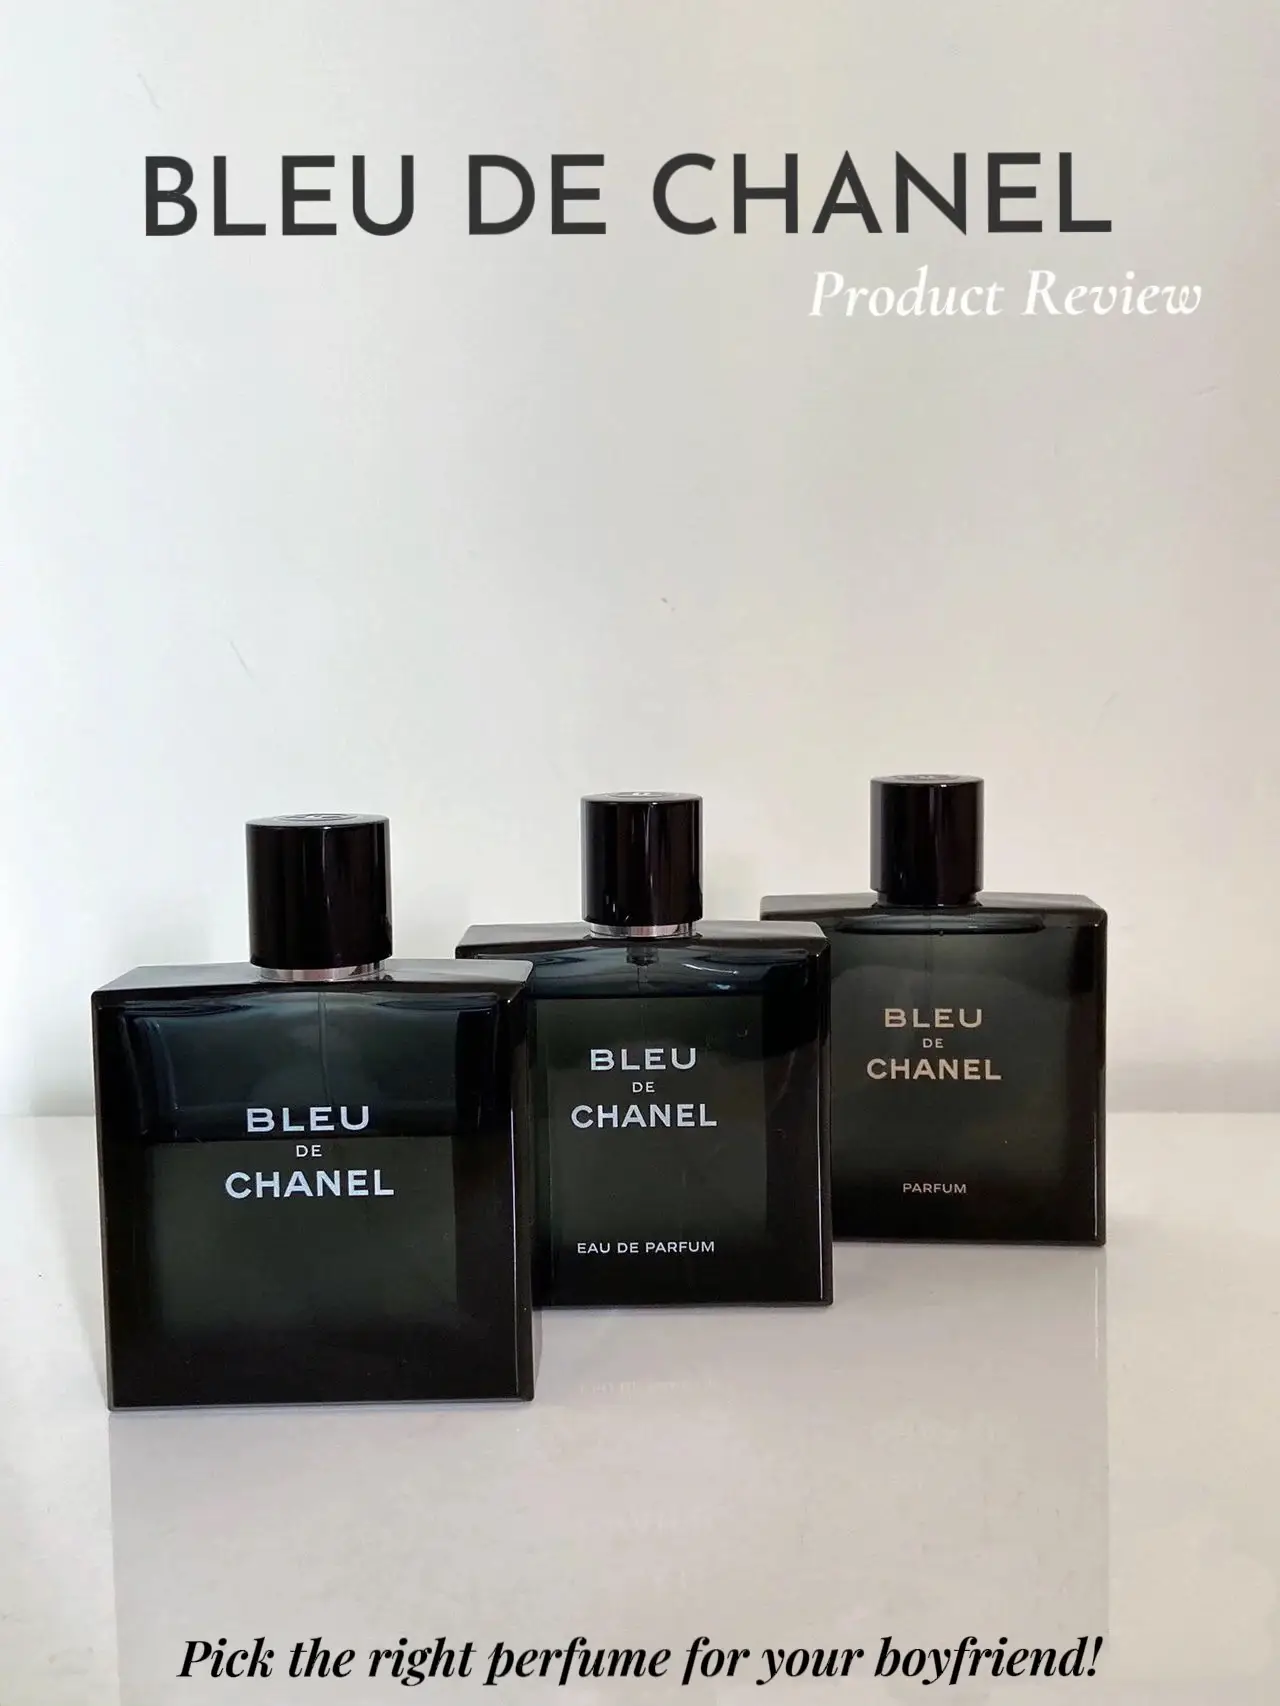 BLEU DE CHANEL PERFUME - Product Review